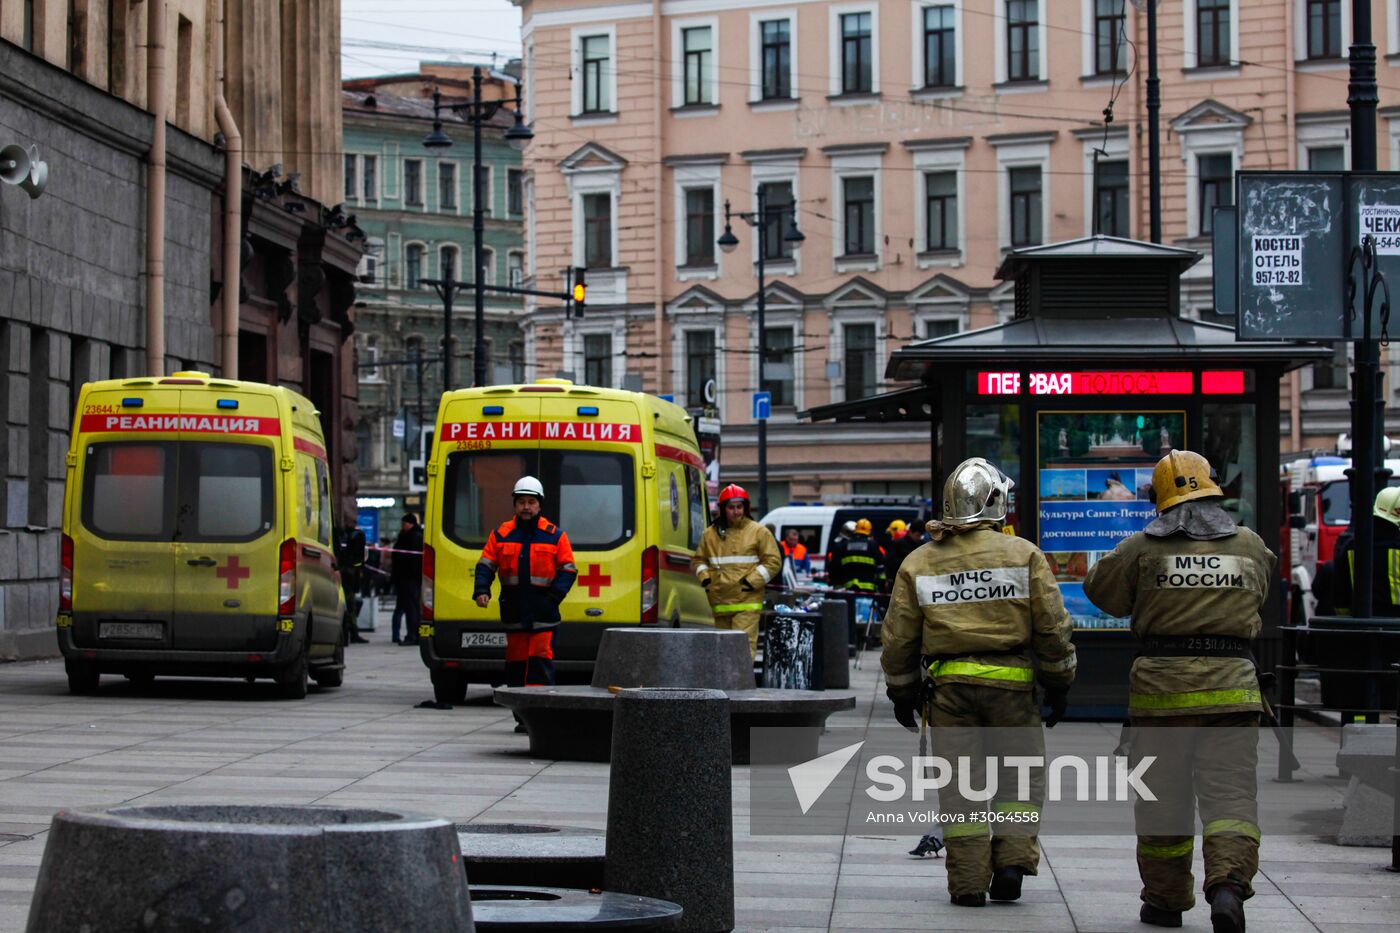 Explosions in the St.Petersburg metro